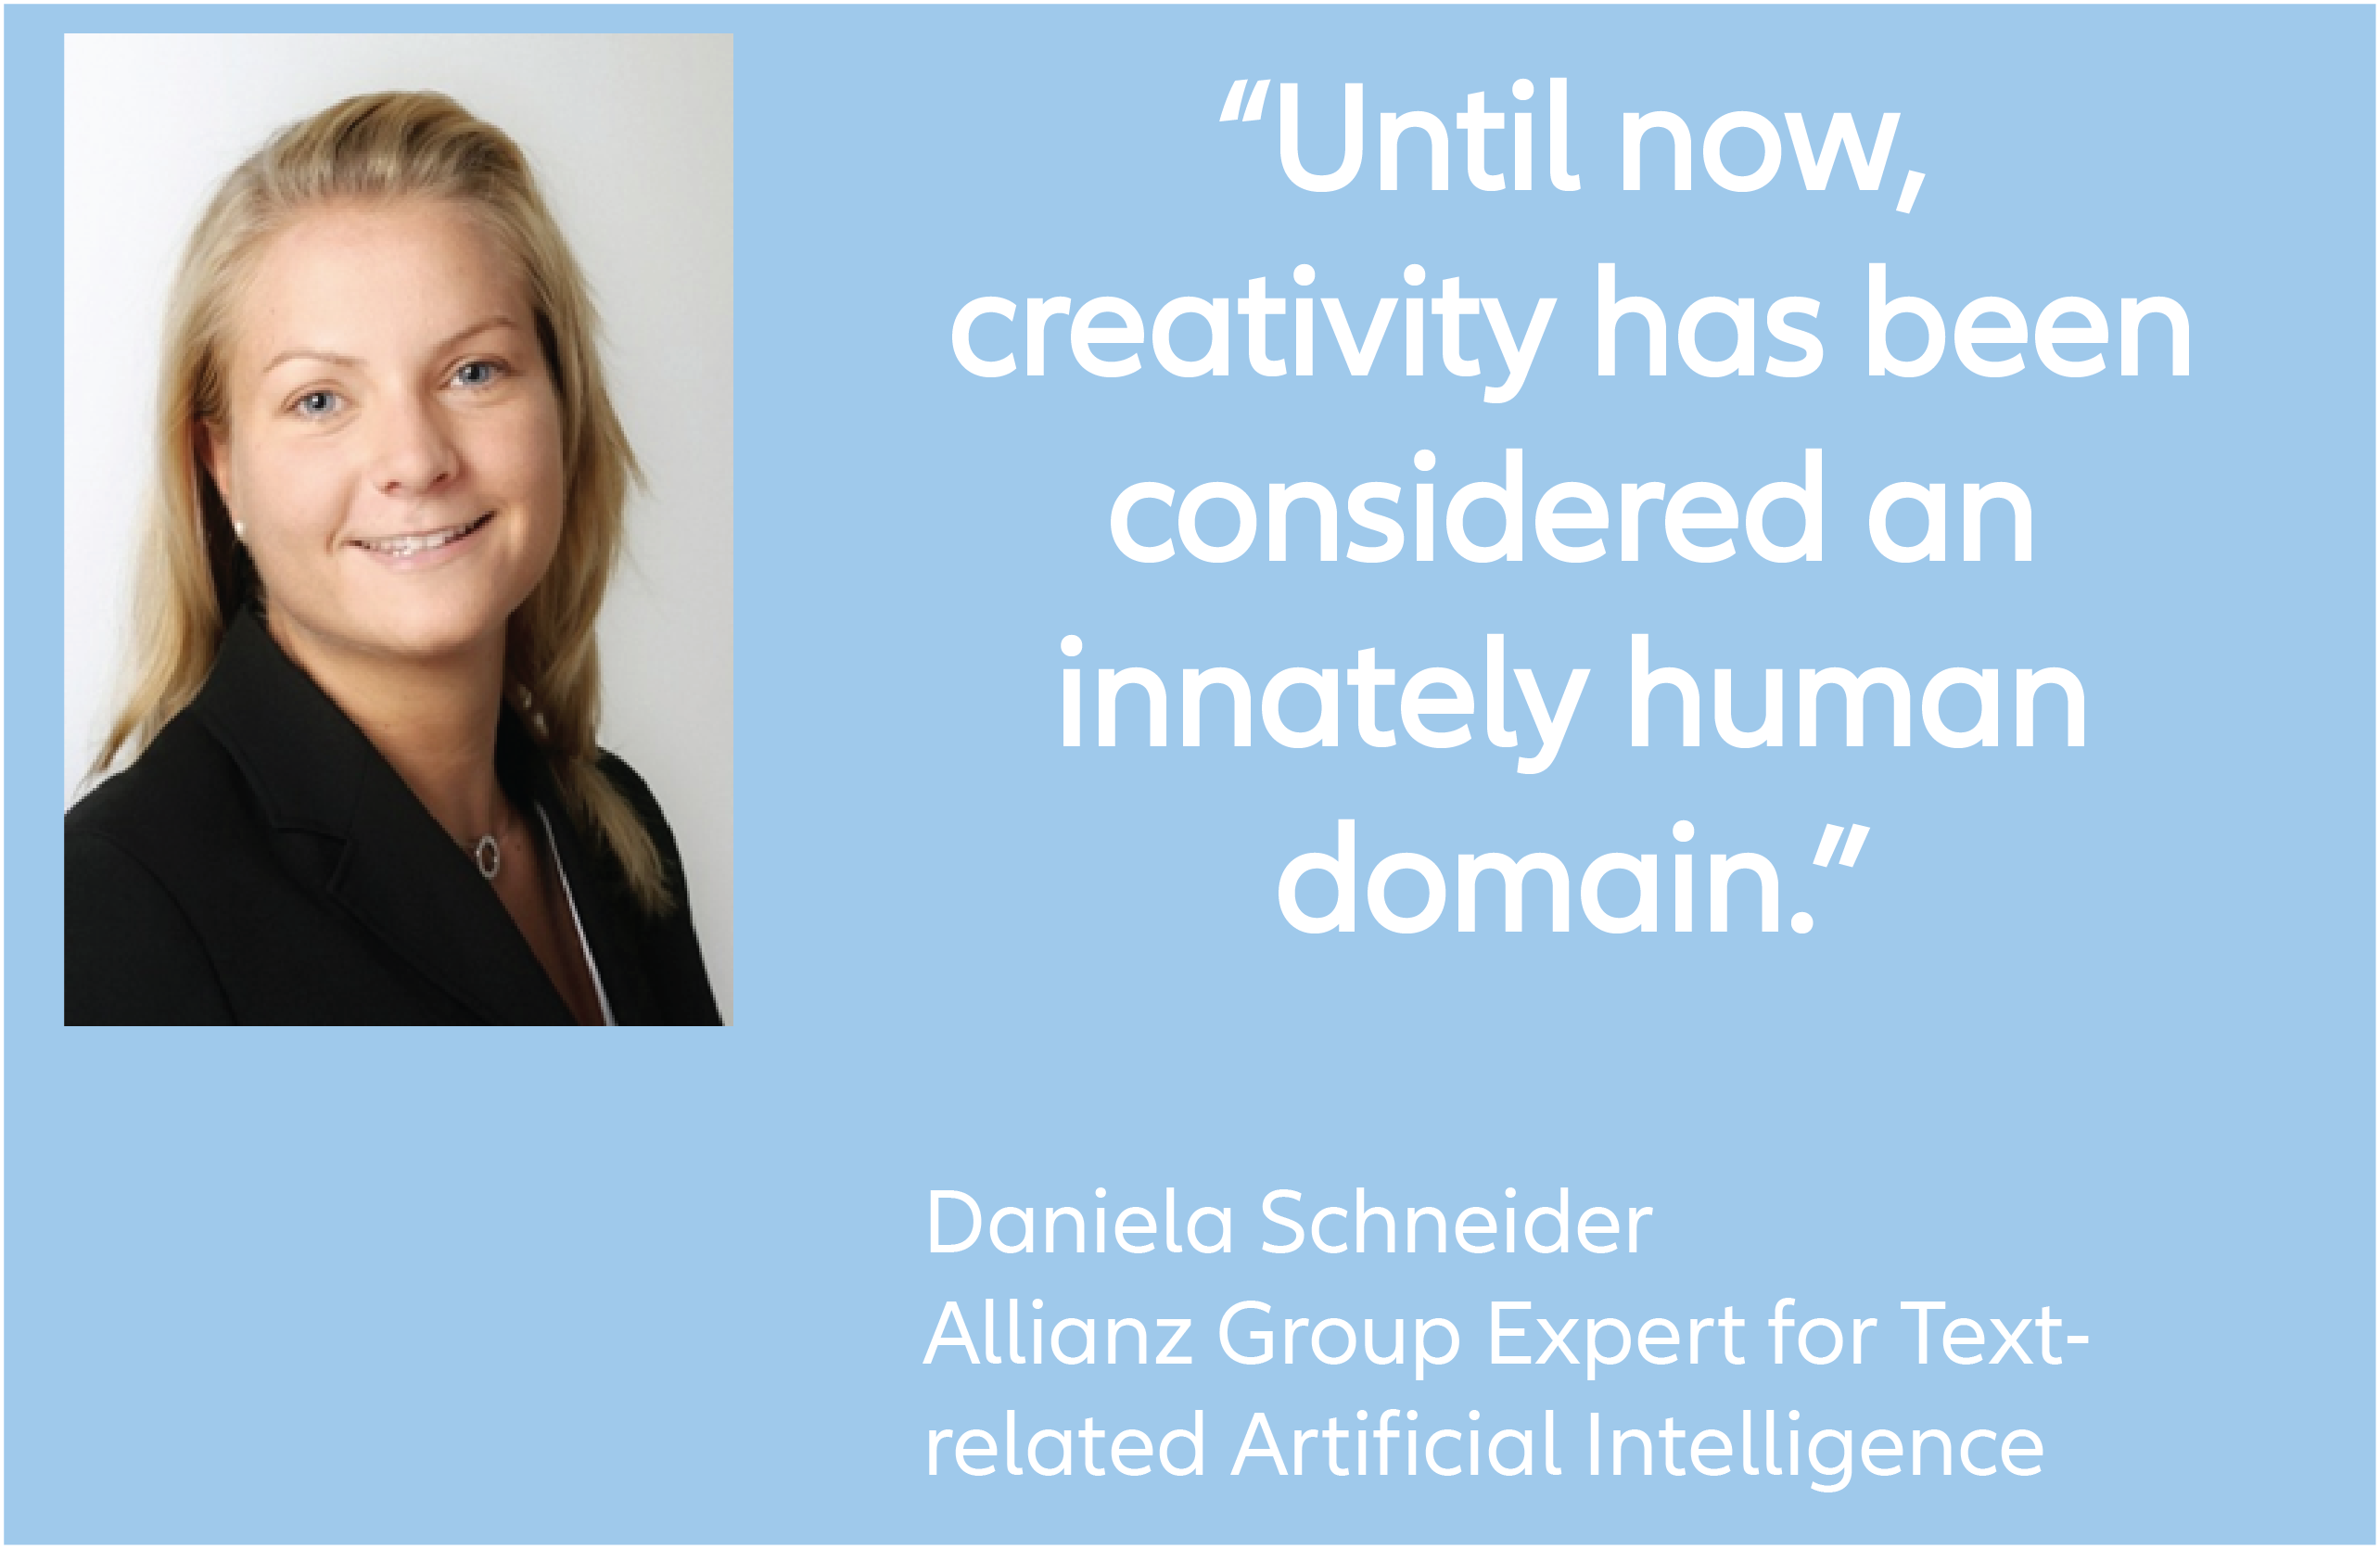 Daniela Schneider: "Until now, creativity has been considered an innately human domain”